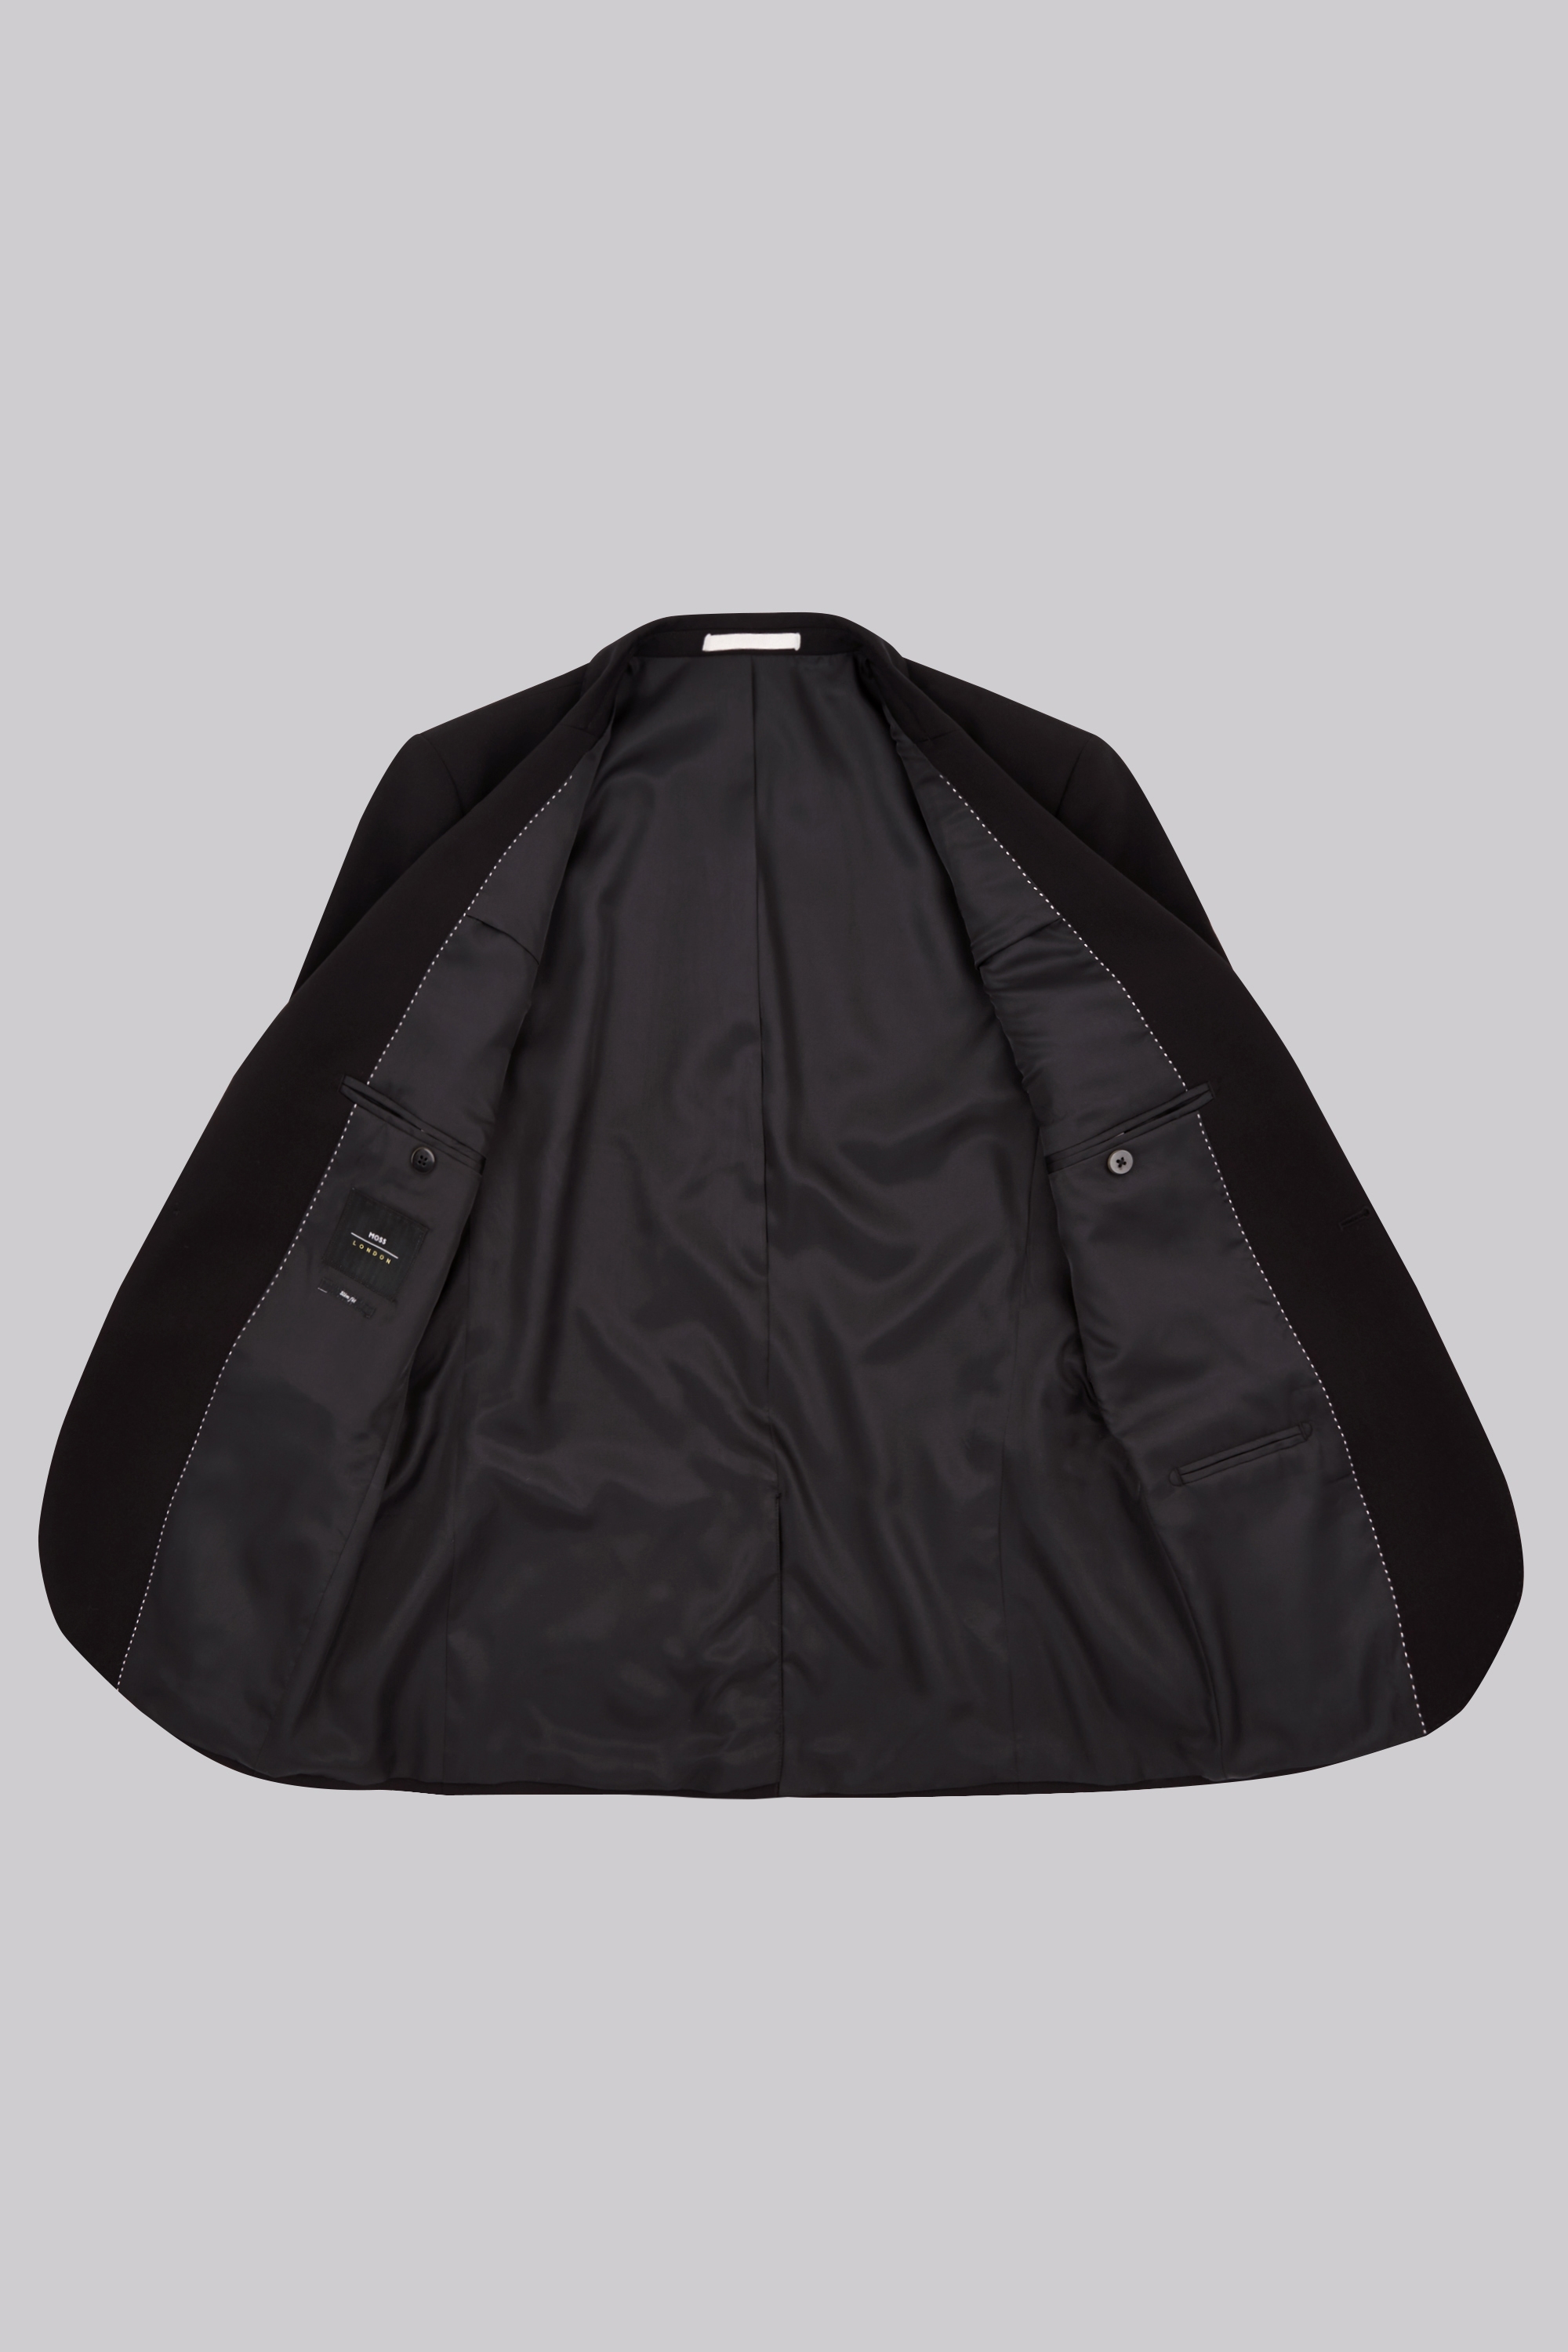 Moss London Slim Fit Black Jacket | Buy Online at Moss